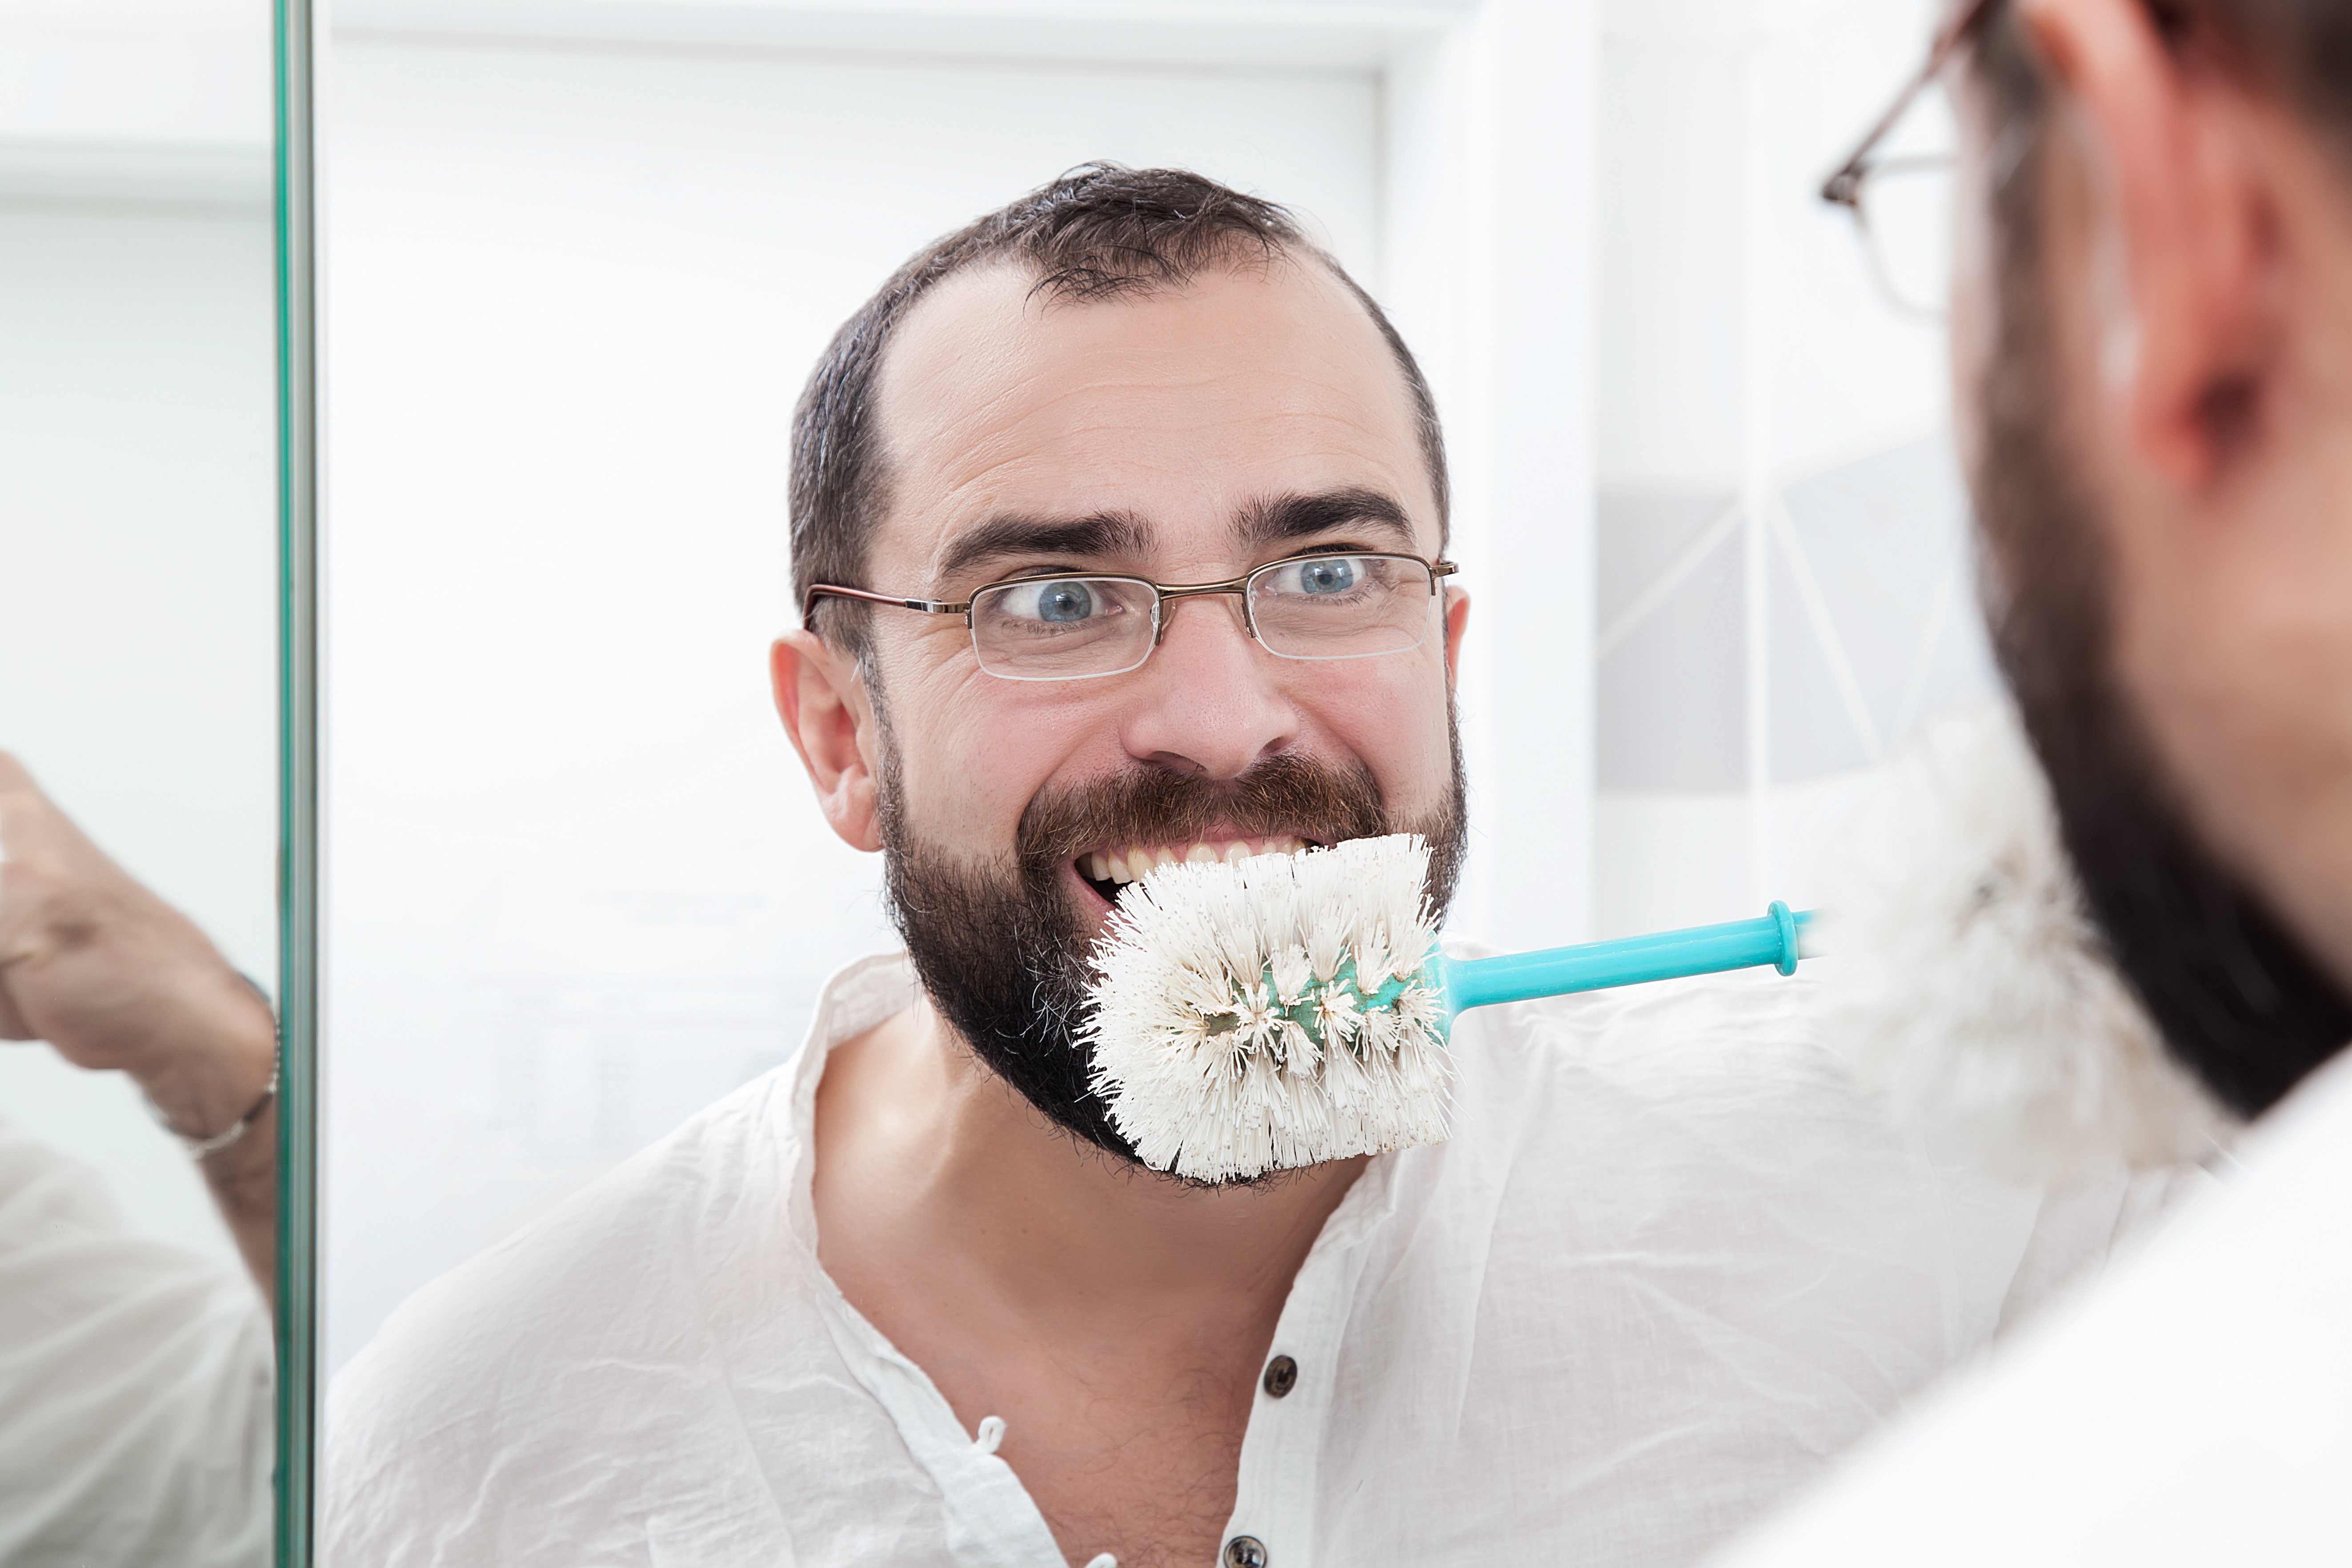 Unhygienic man brushing teeth with toilet brush